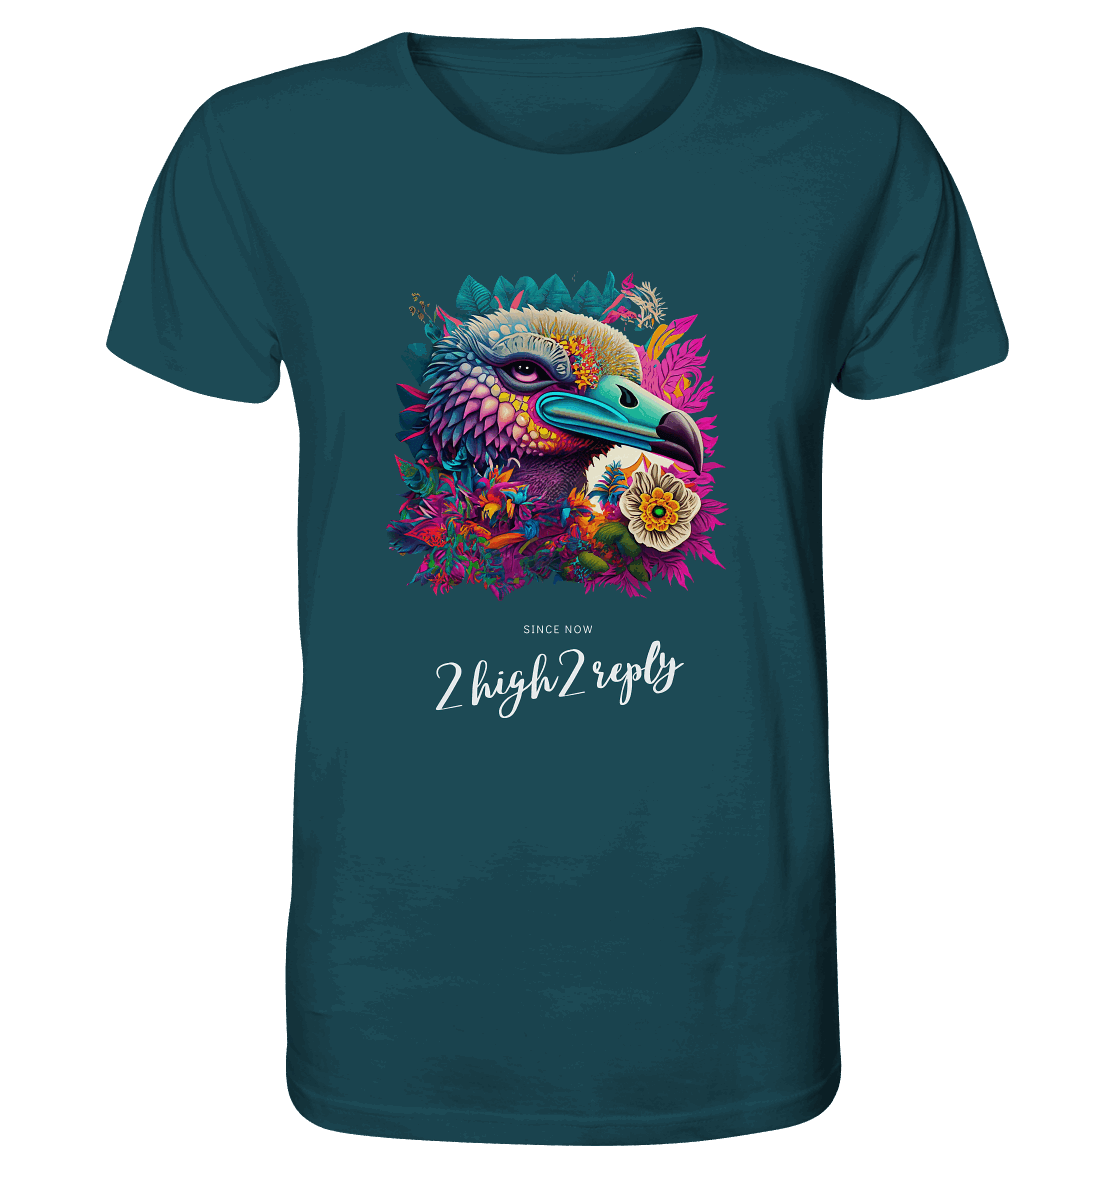 2high2reply / seagull - Organic Shirt